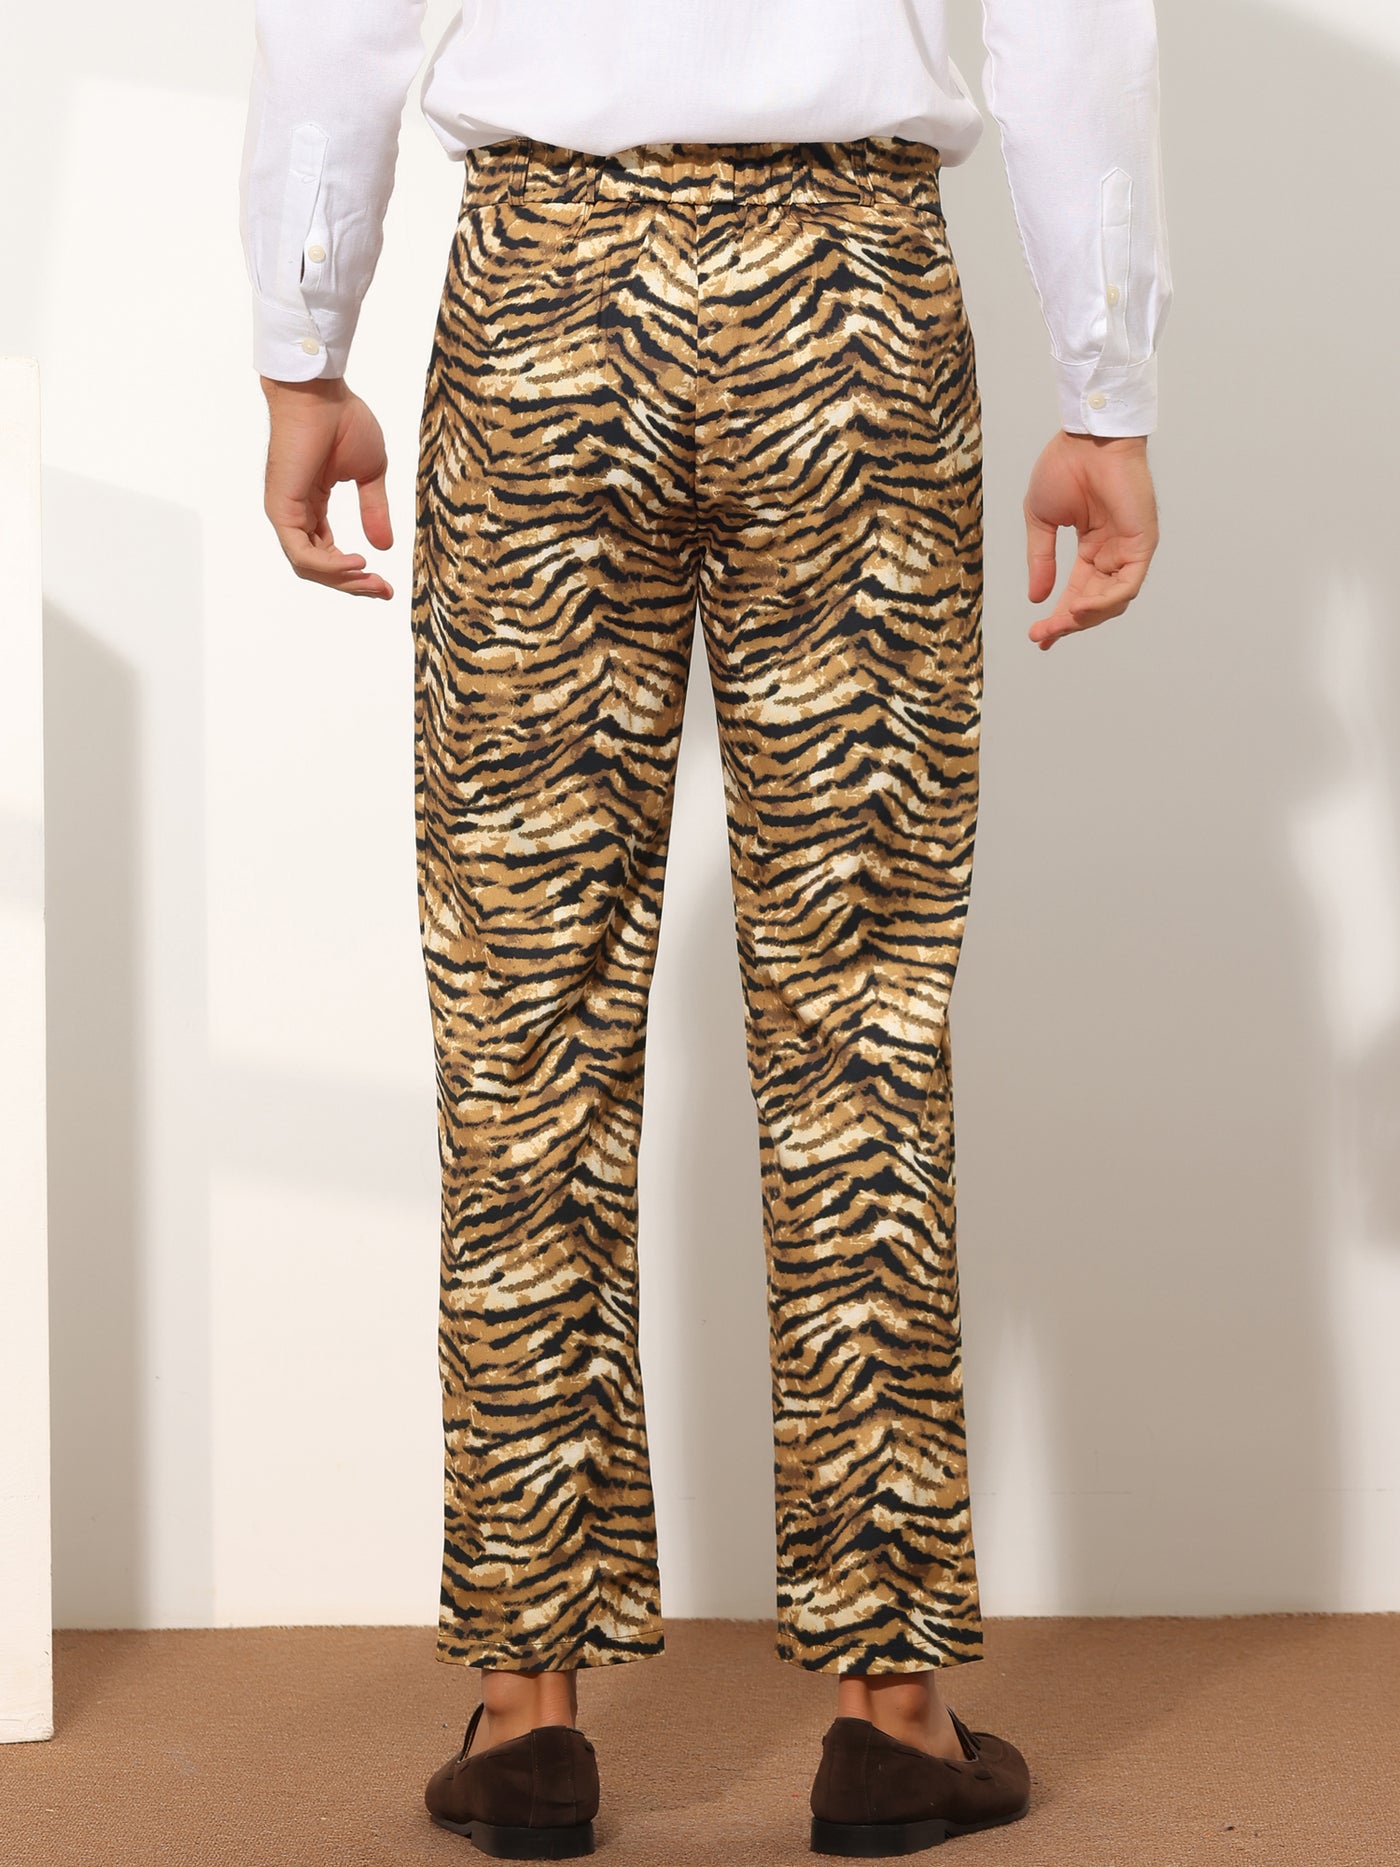 Bublédon Animal Printed Dress Pants for Men's Regular Fit Button Closure Pattern Trousers